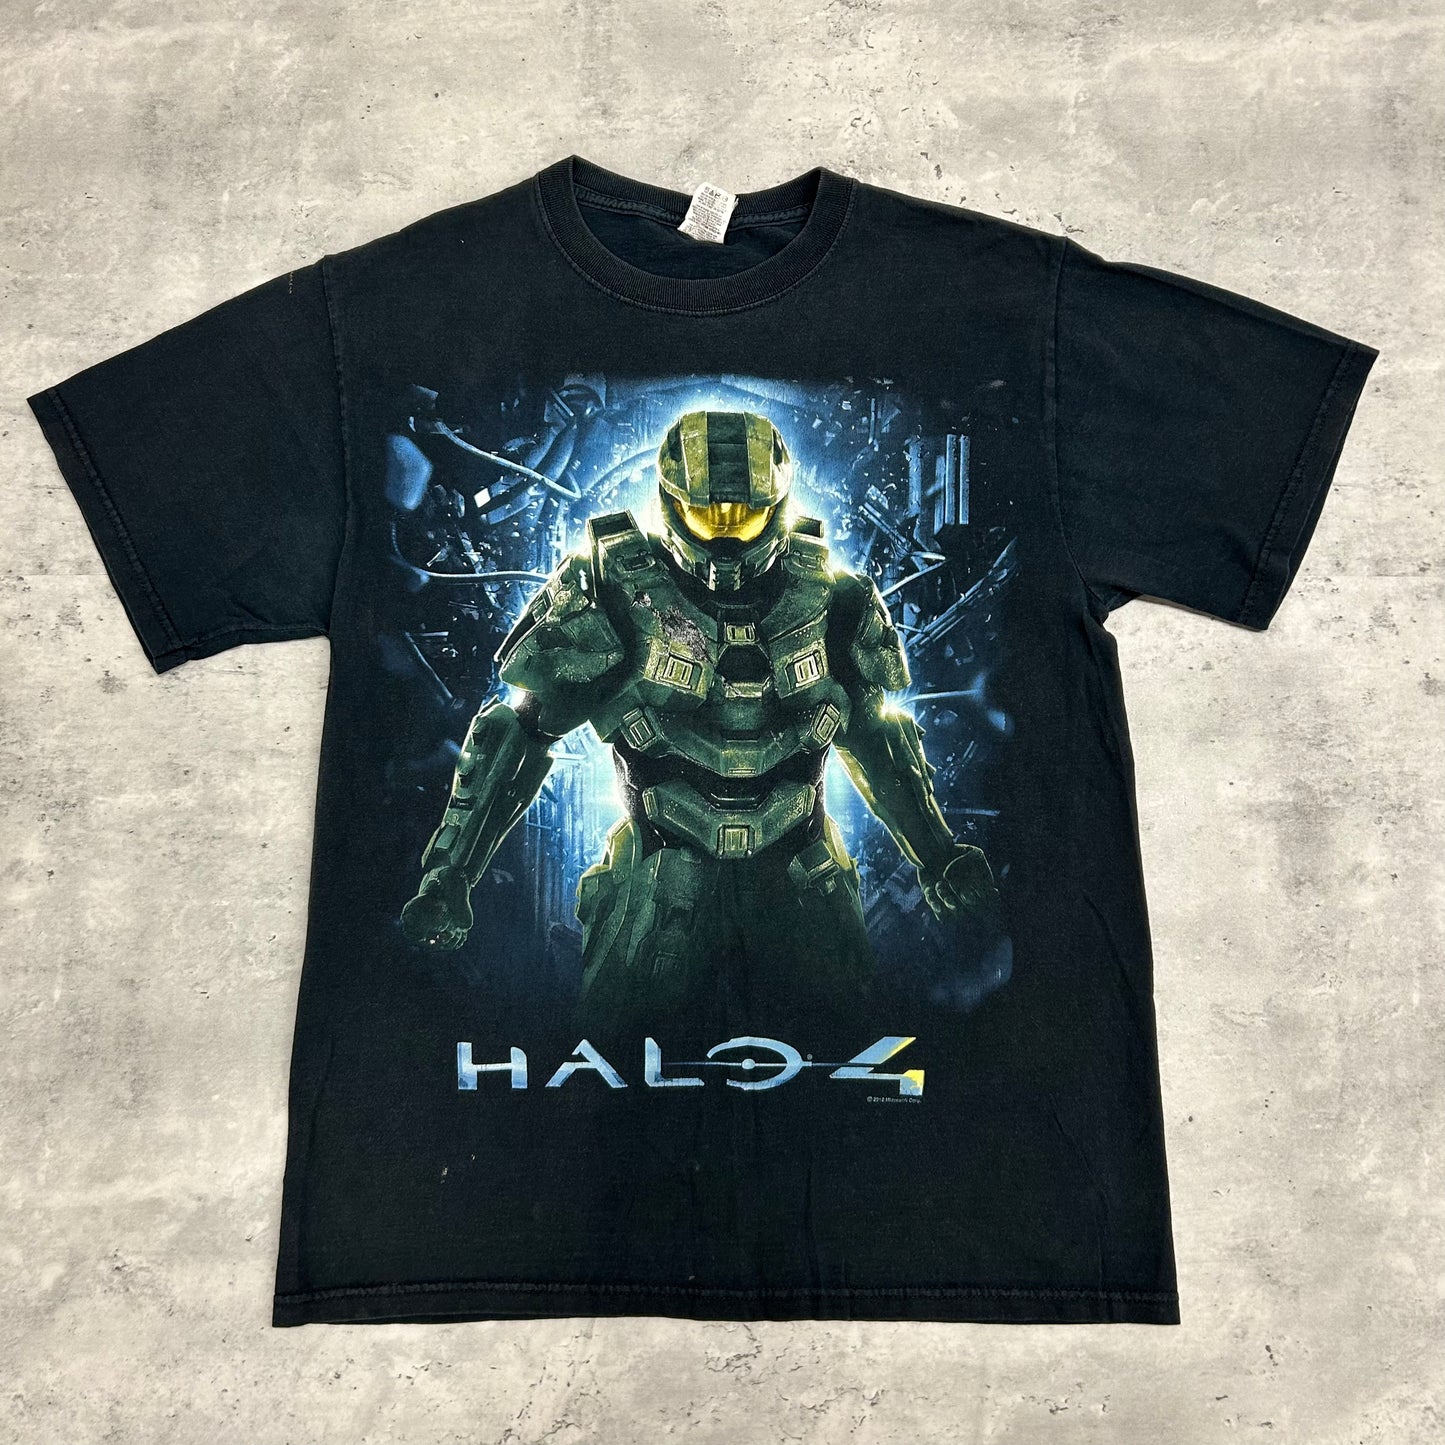 2012 Halo 4 T-Shirt size M